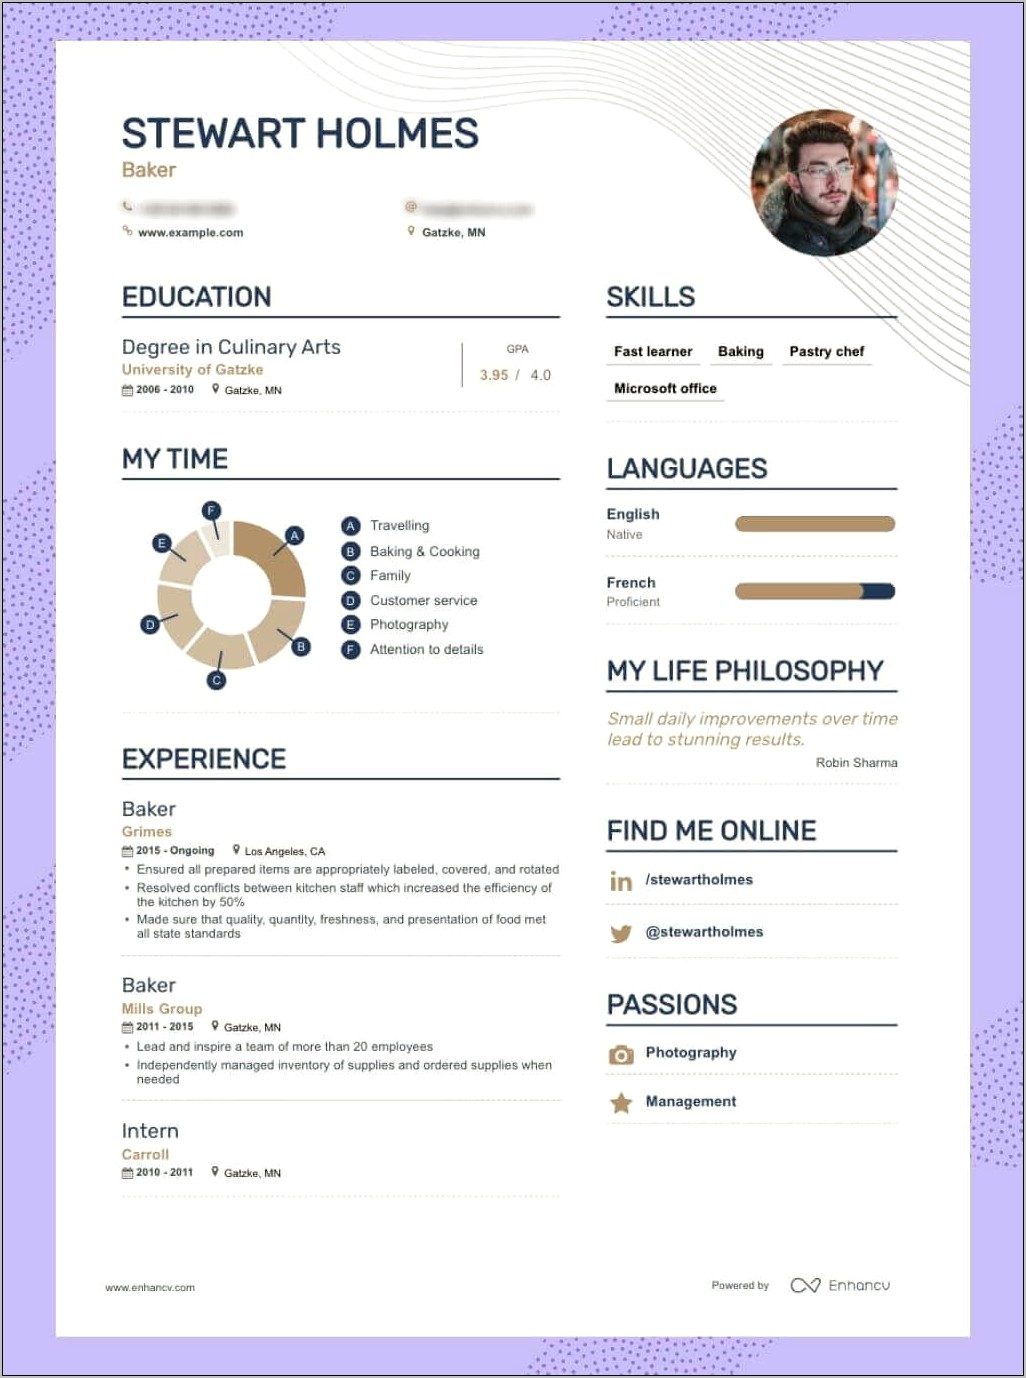 Job Description Website For Resumes